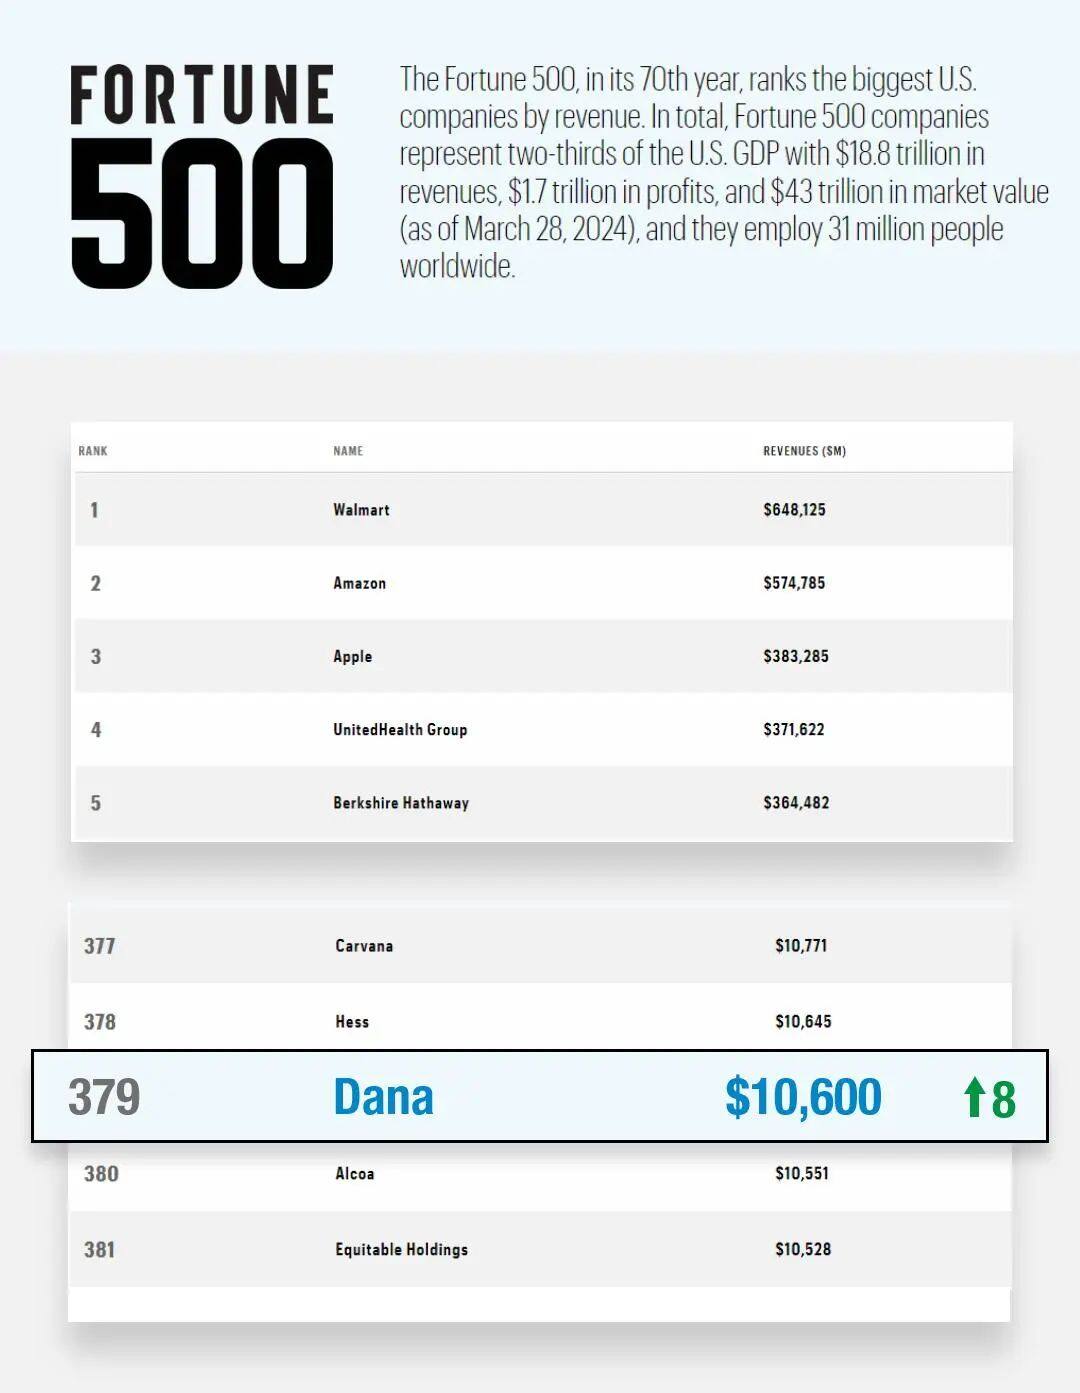 Dana连续70年入选《财富》500强榜单